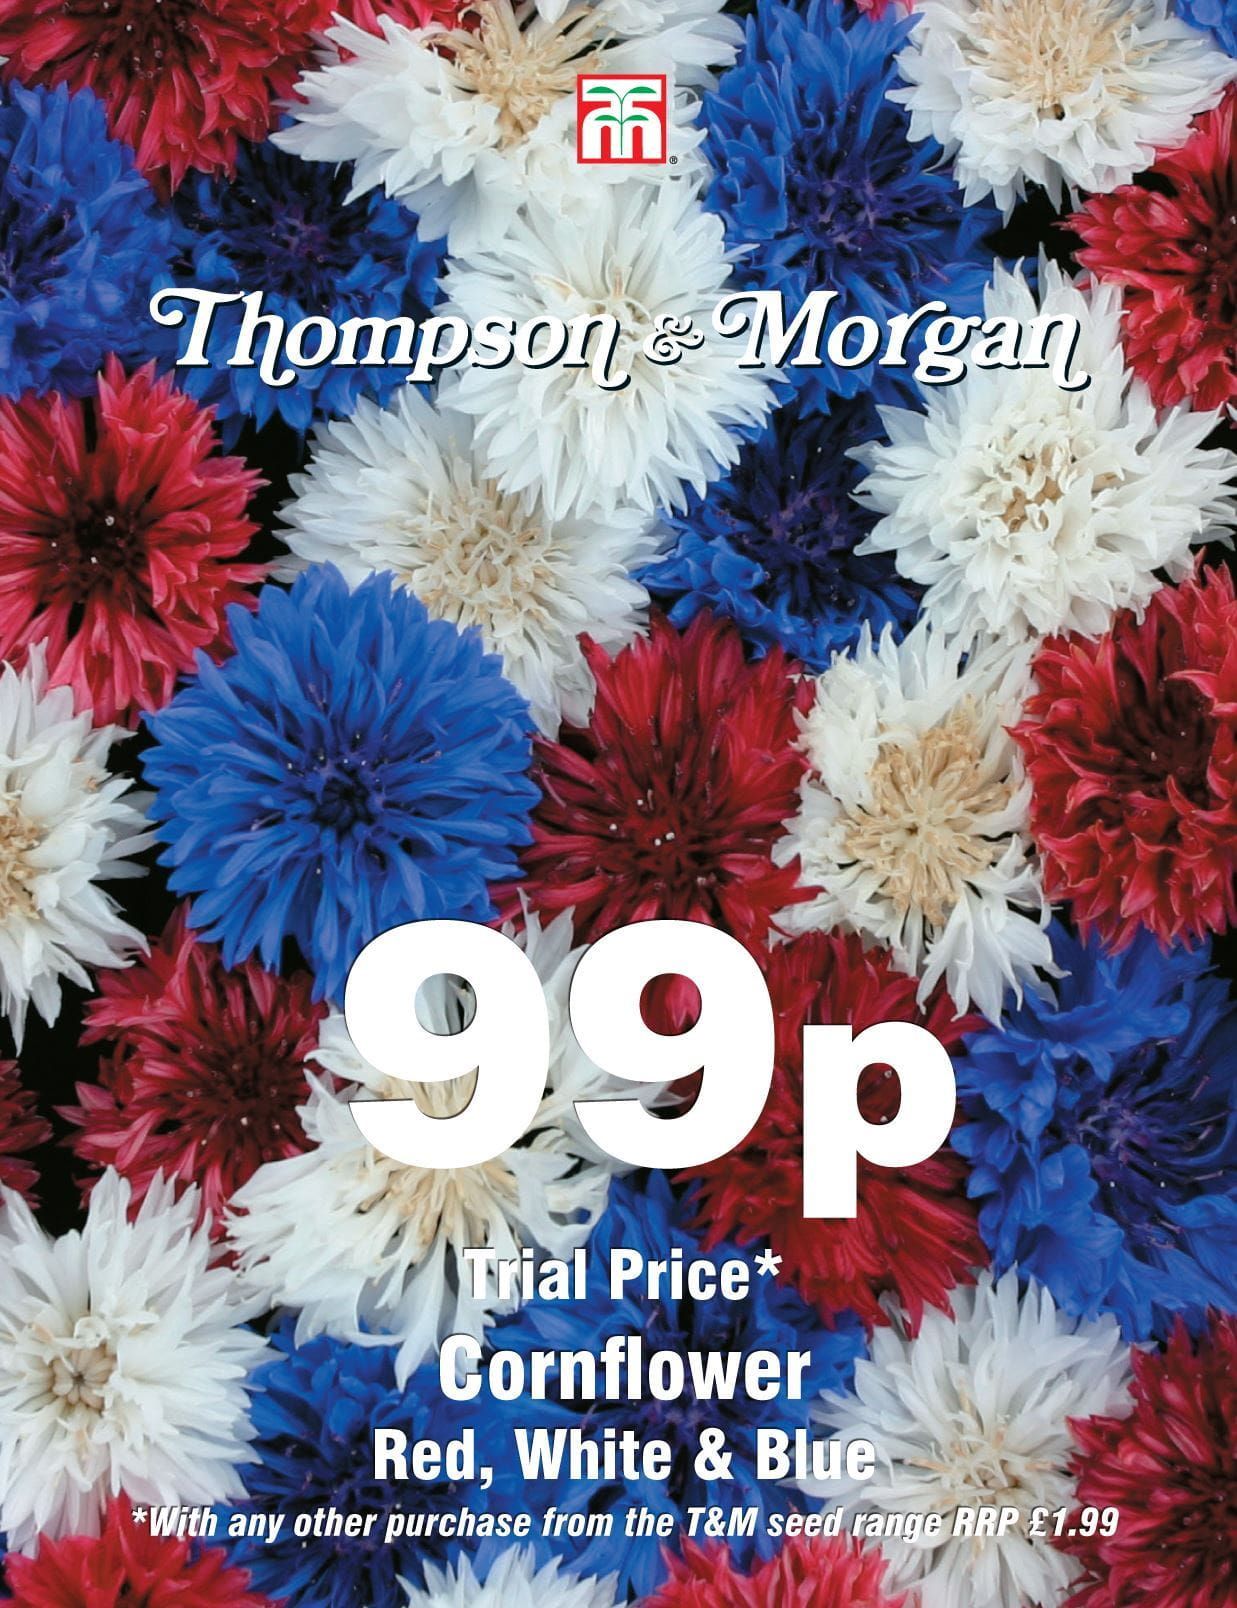 Thompson & Morgan - 99p Flower - Cornflower - Red, White & Blue - 125 Seeds